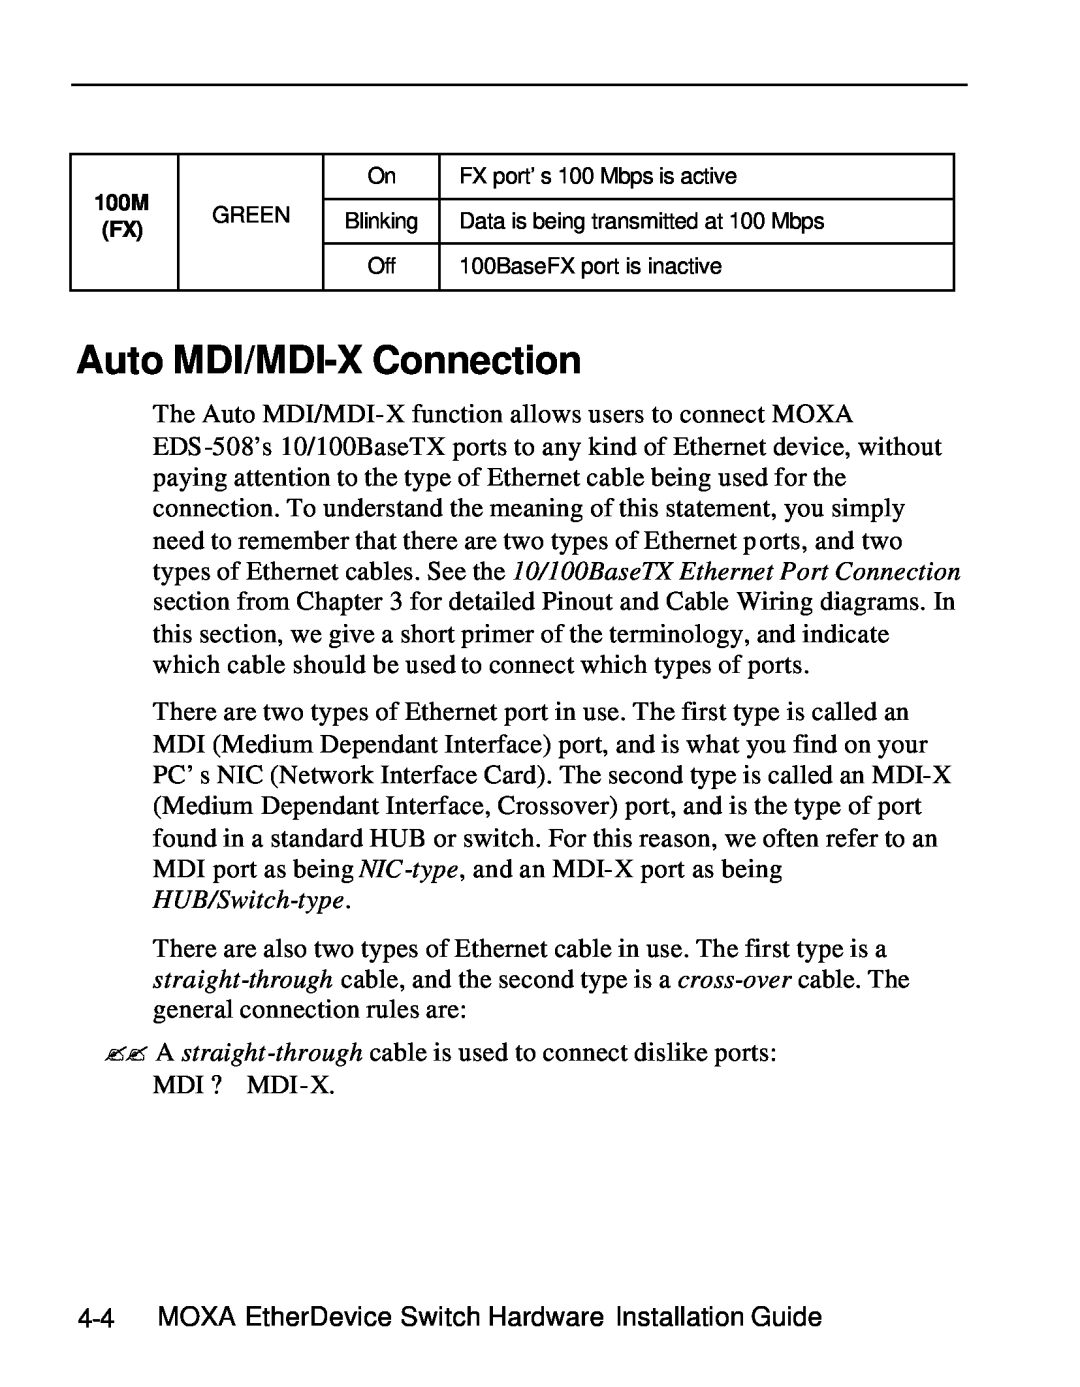 Moxa Technologies EDS-508 manual Auto MDI/MDI-X Connection 